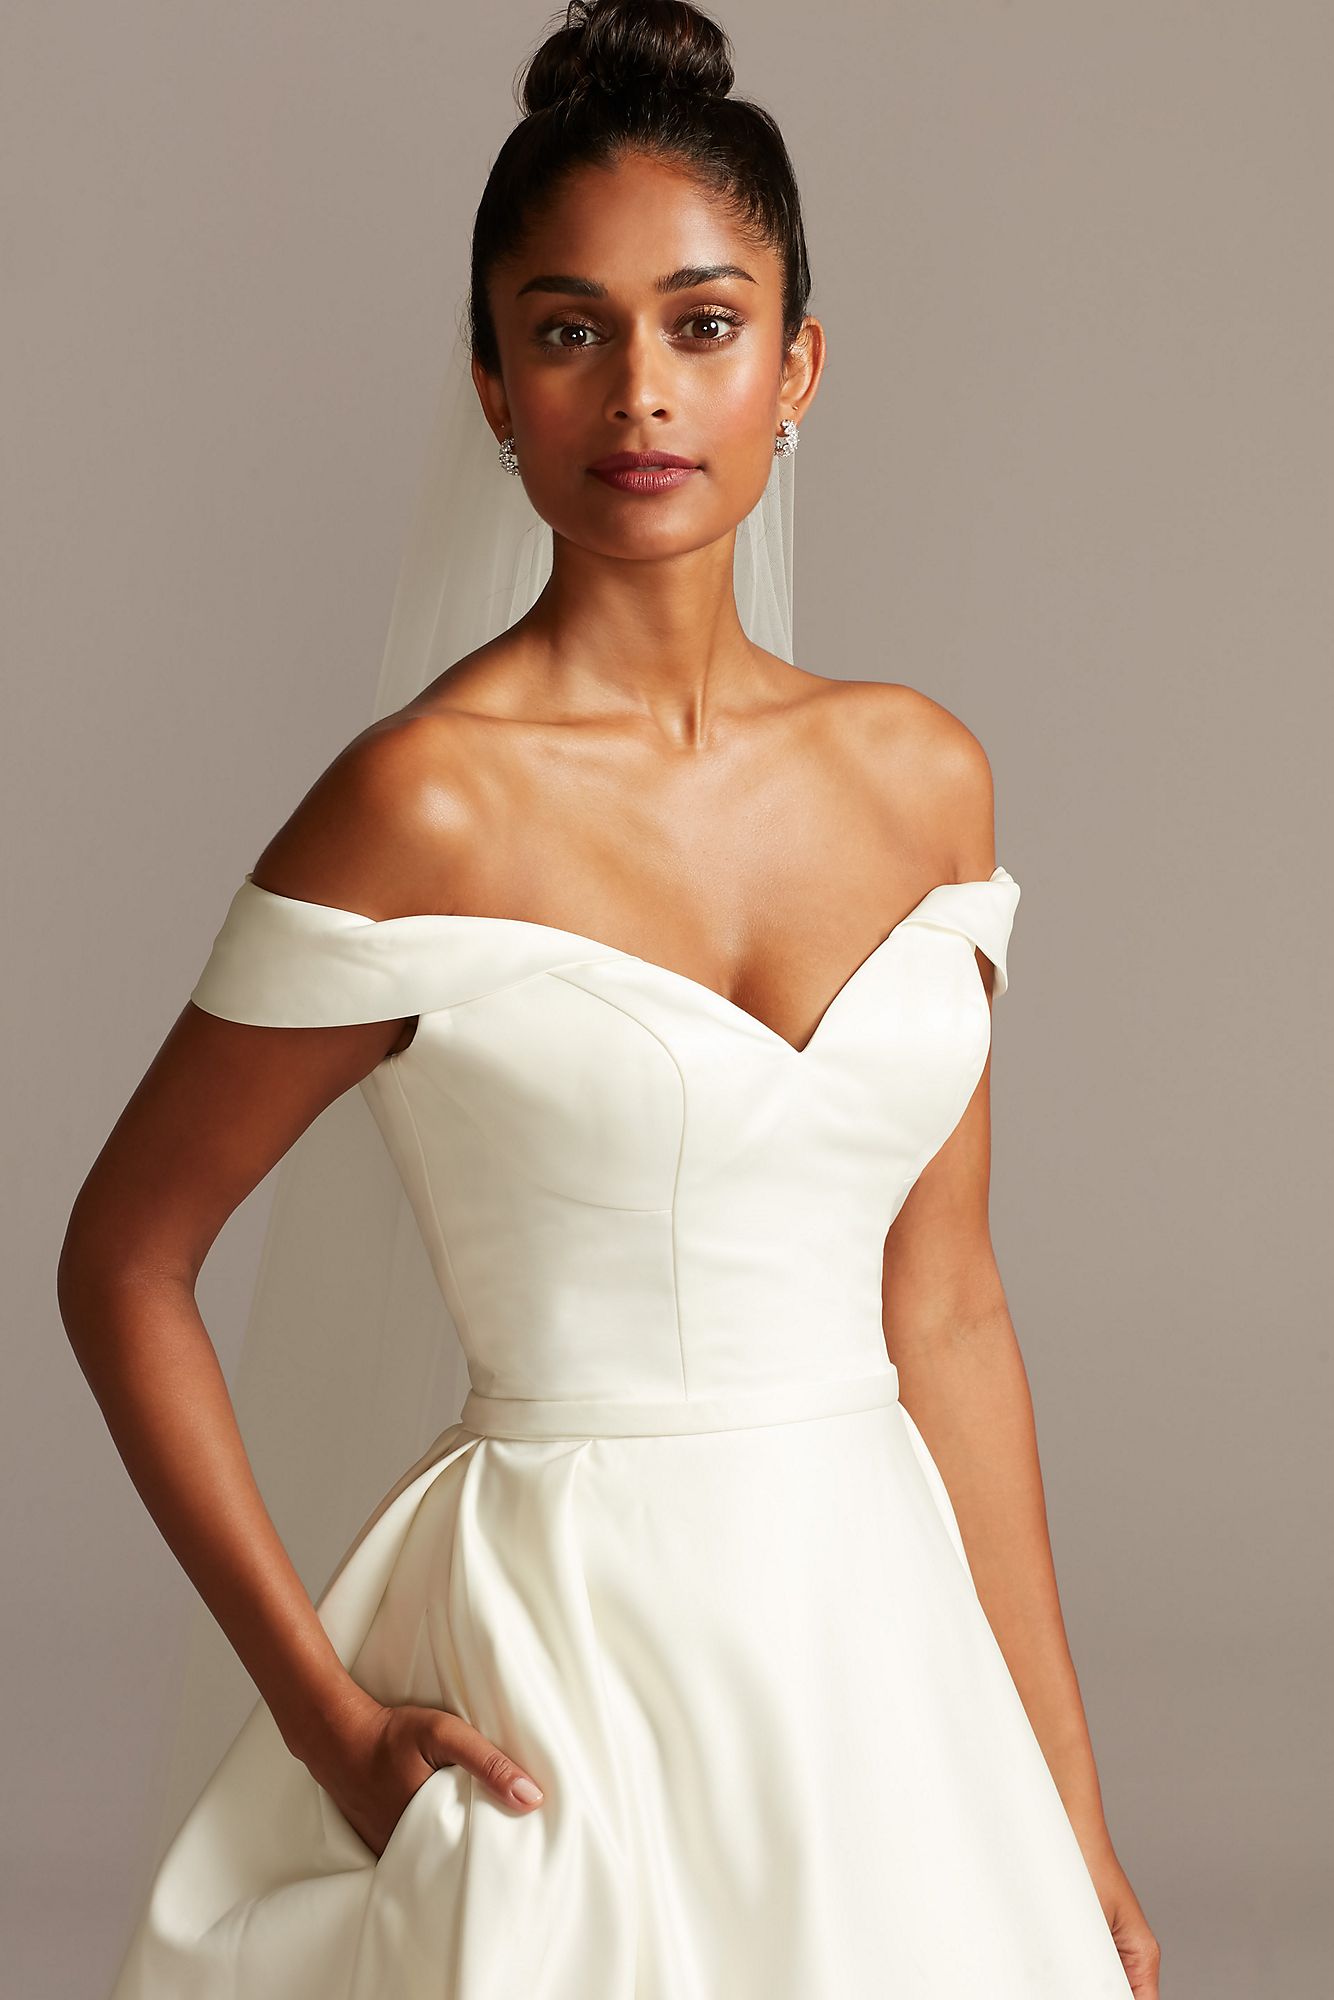 Elegant Off the Shoulder A-line Long Satin Bridal Dress Style WG3979 with Pockets